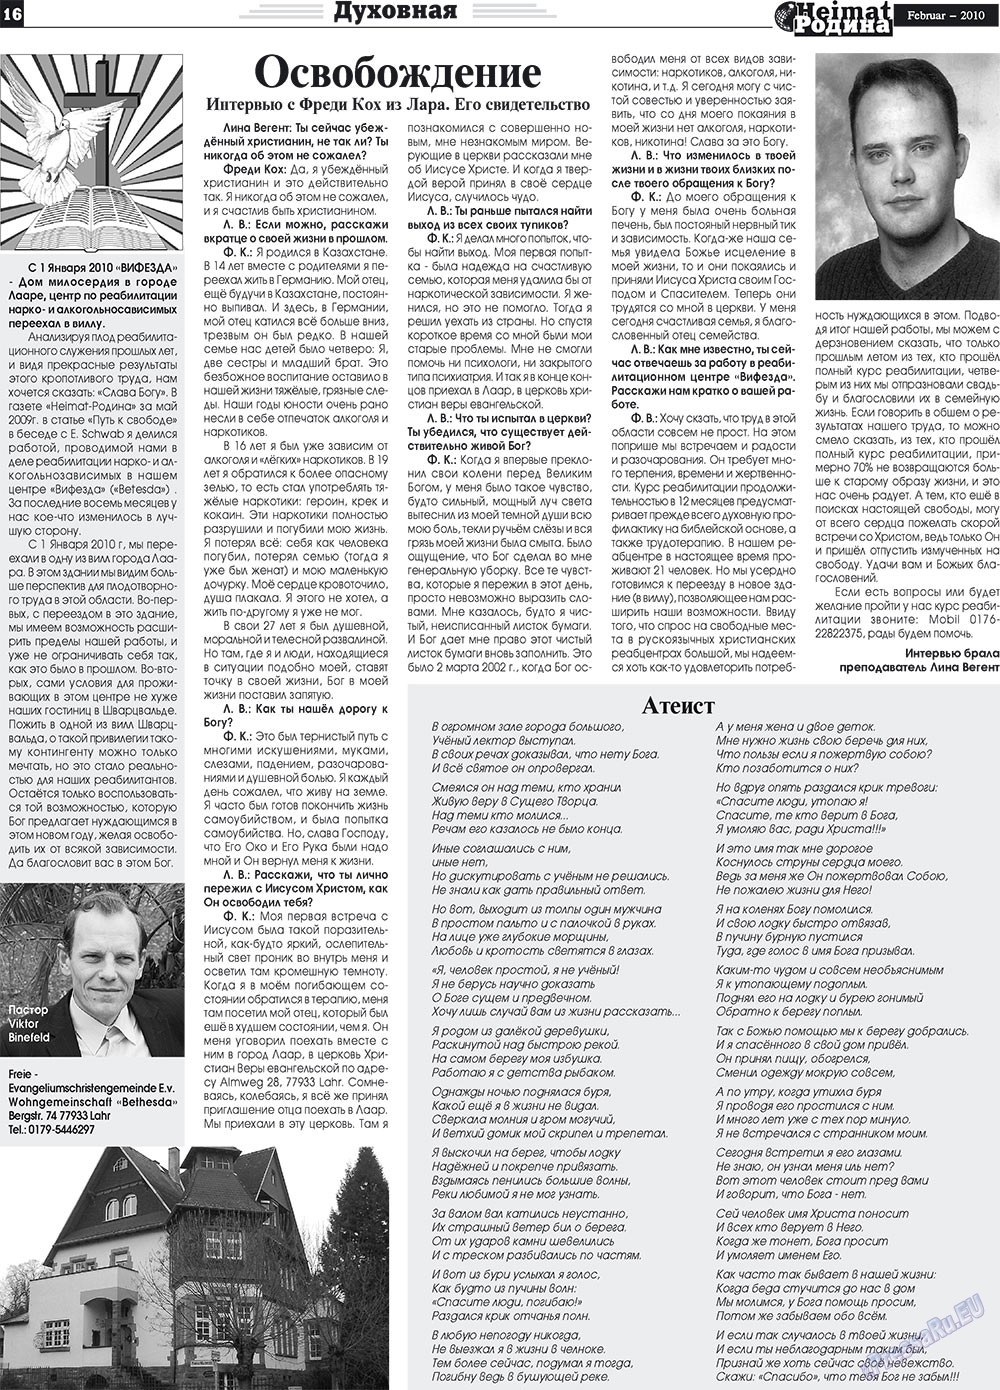 Heimat-Родина, газета. 2010 №2 стр.16